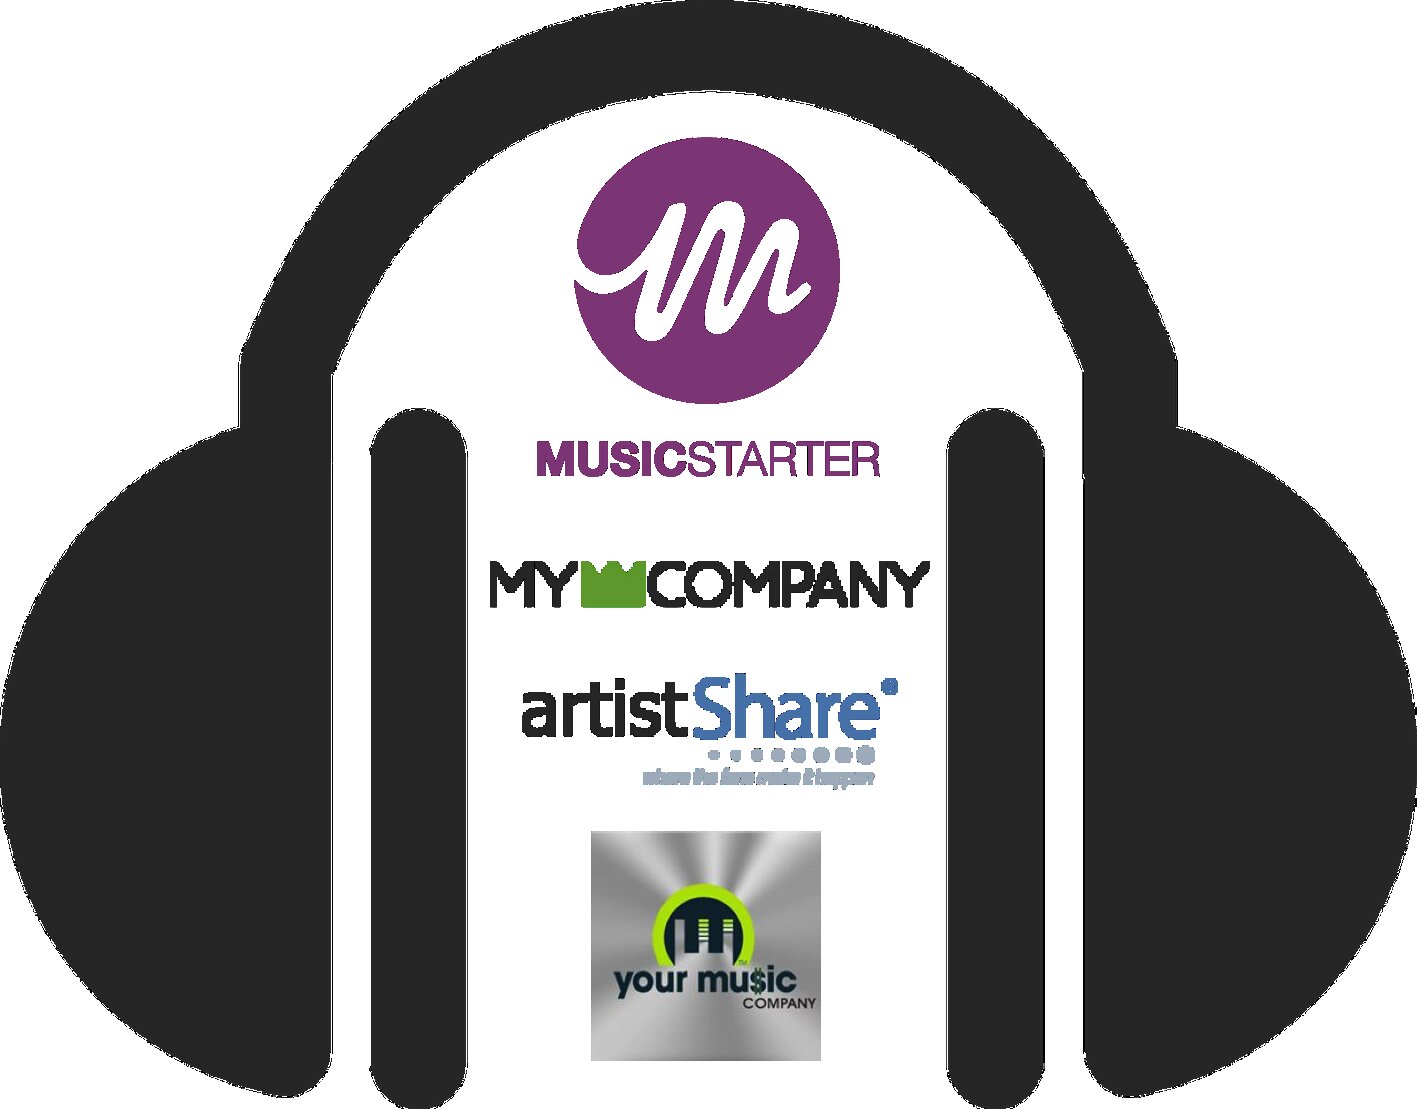 Graphik zu Crowdfunding-Musiklabels